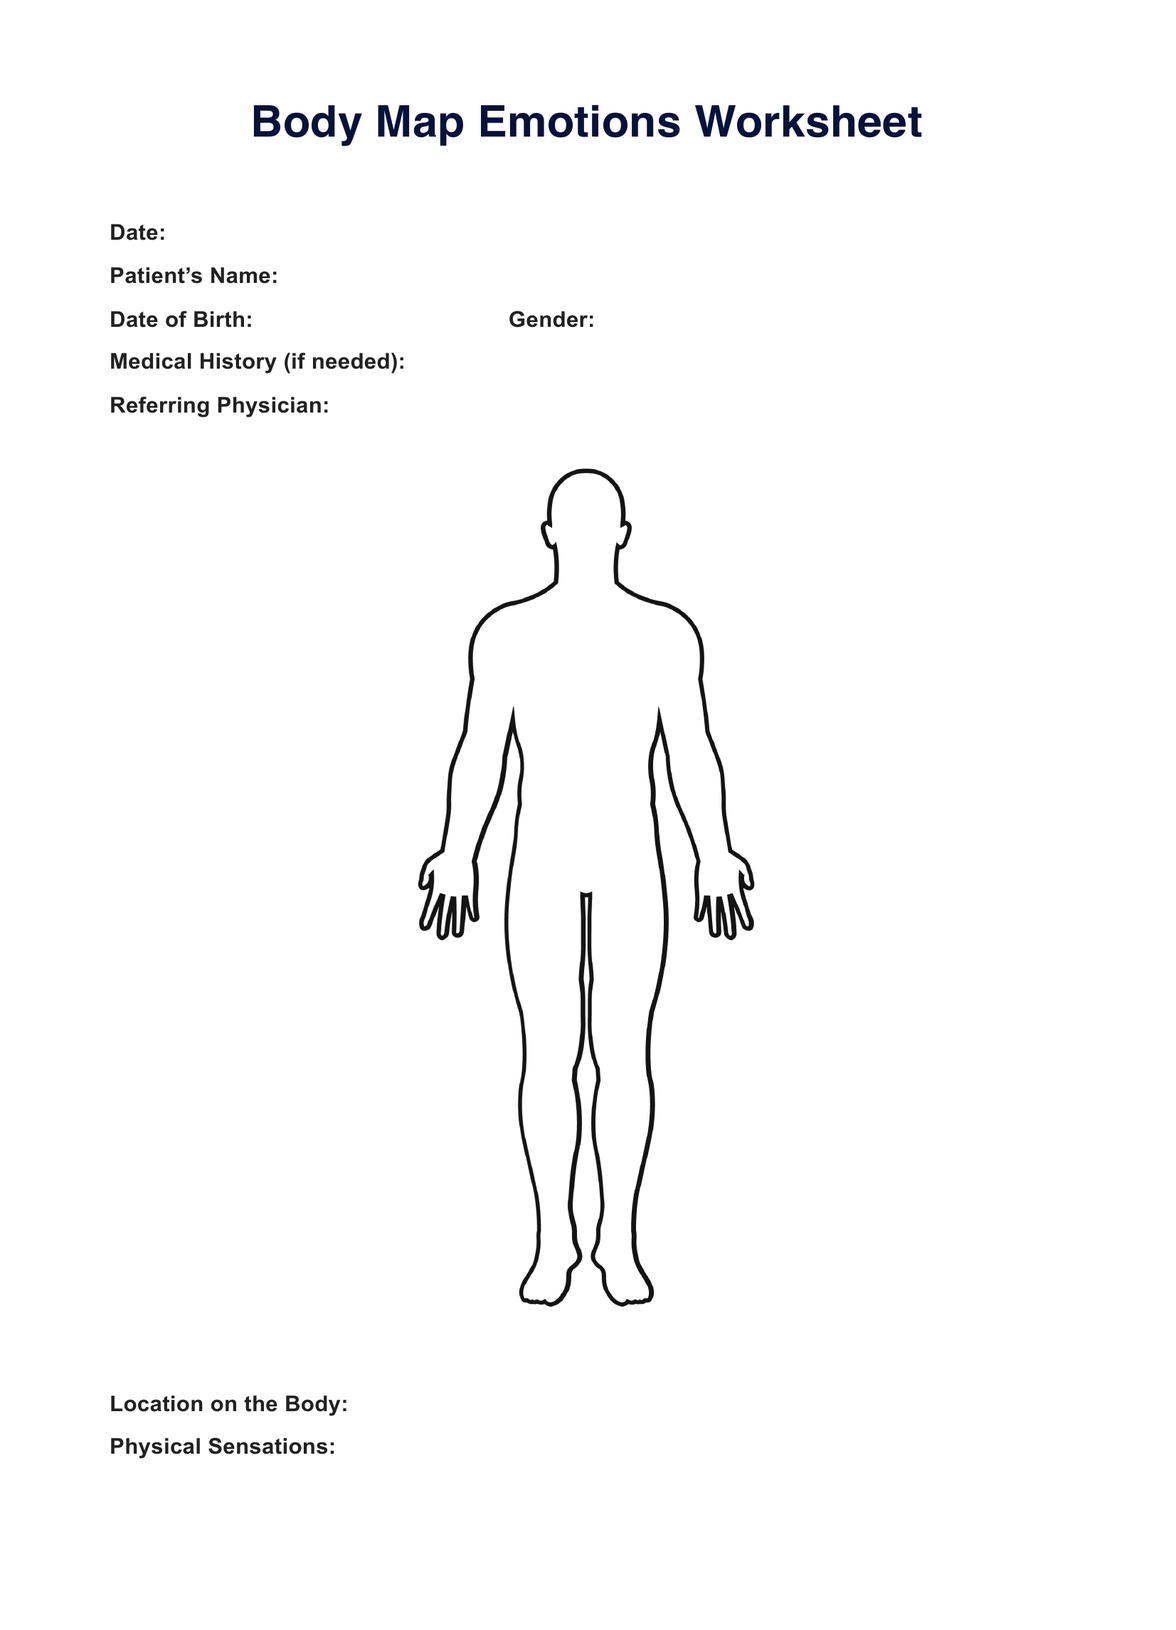 Body Map Emotions Worksheet PDF Example